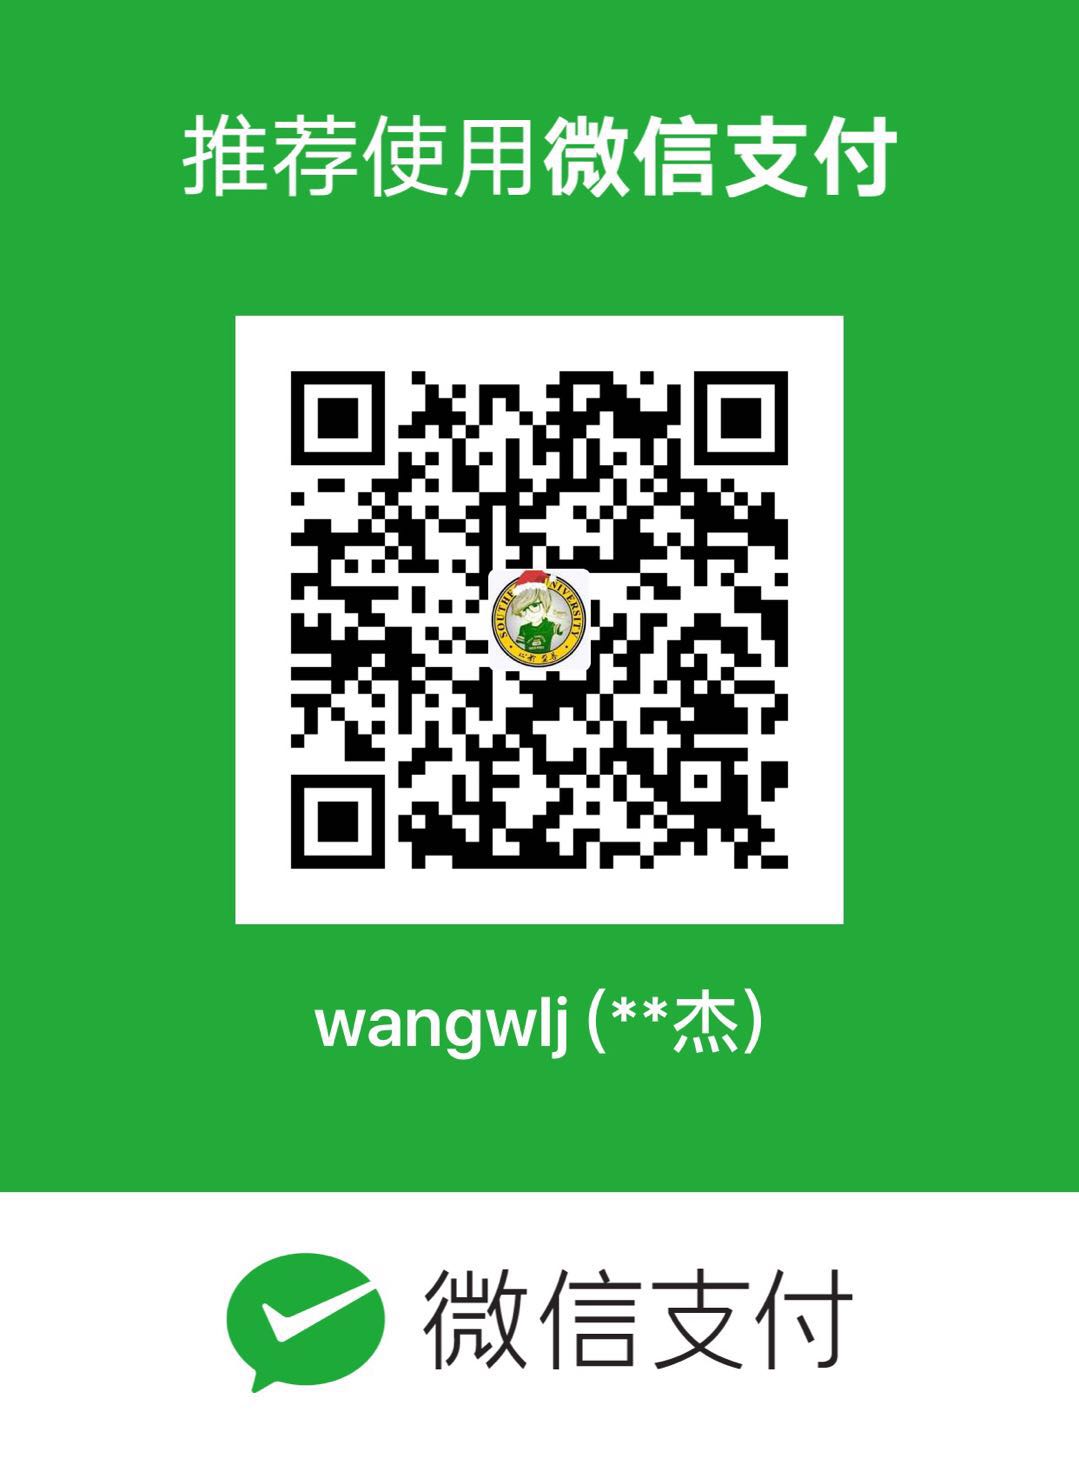 wangwlj 微信支付